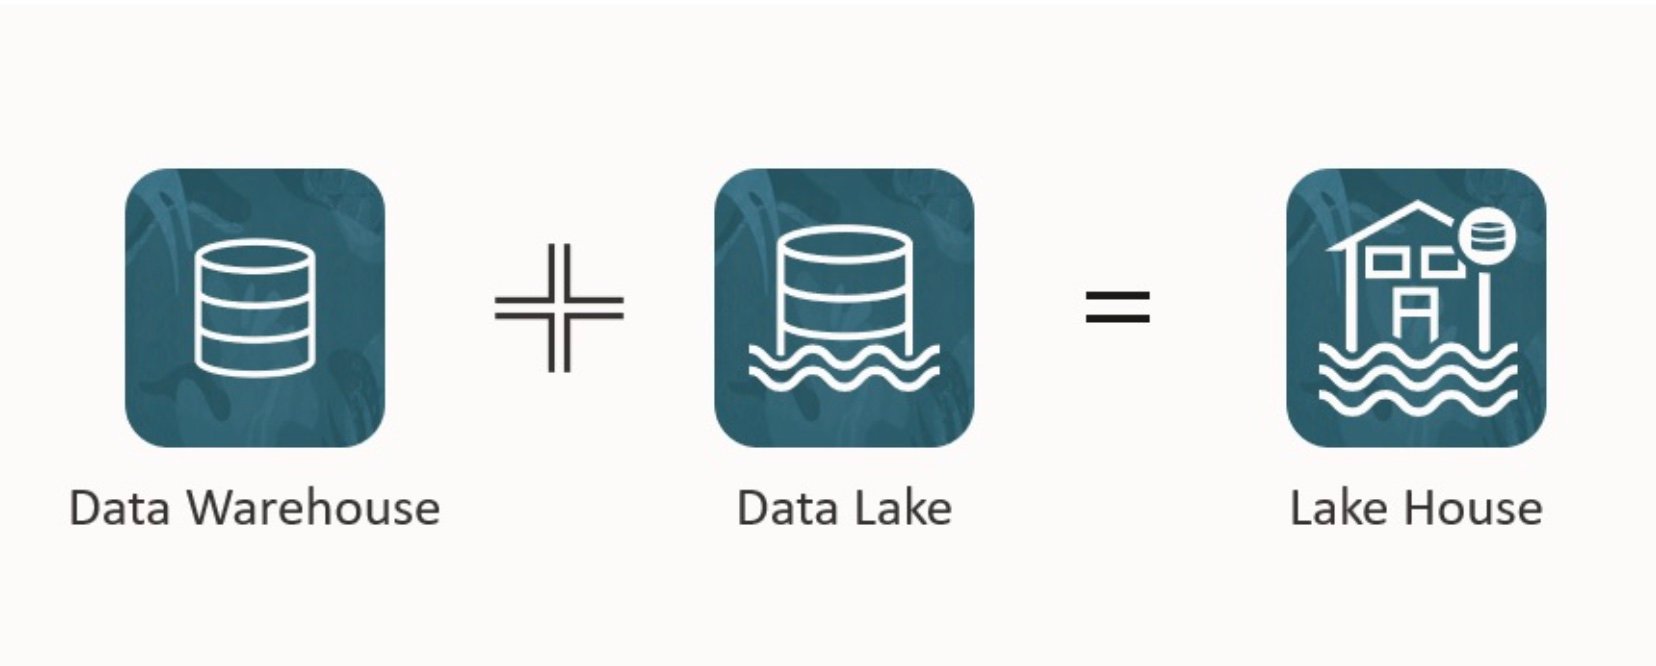 Data Lakehouse source Infolob